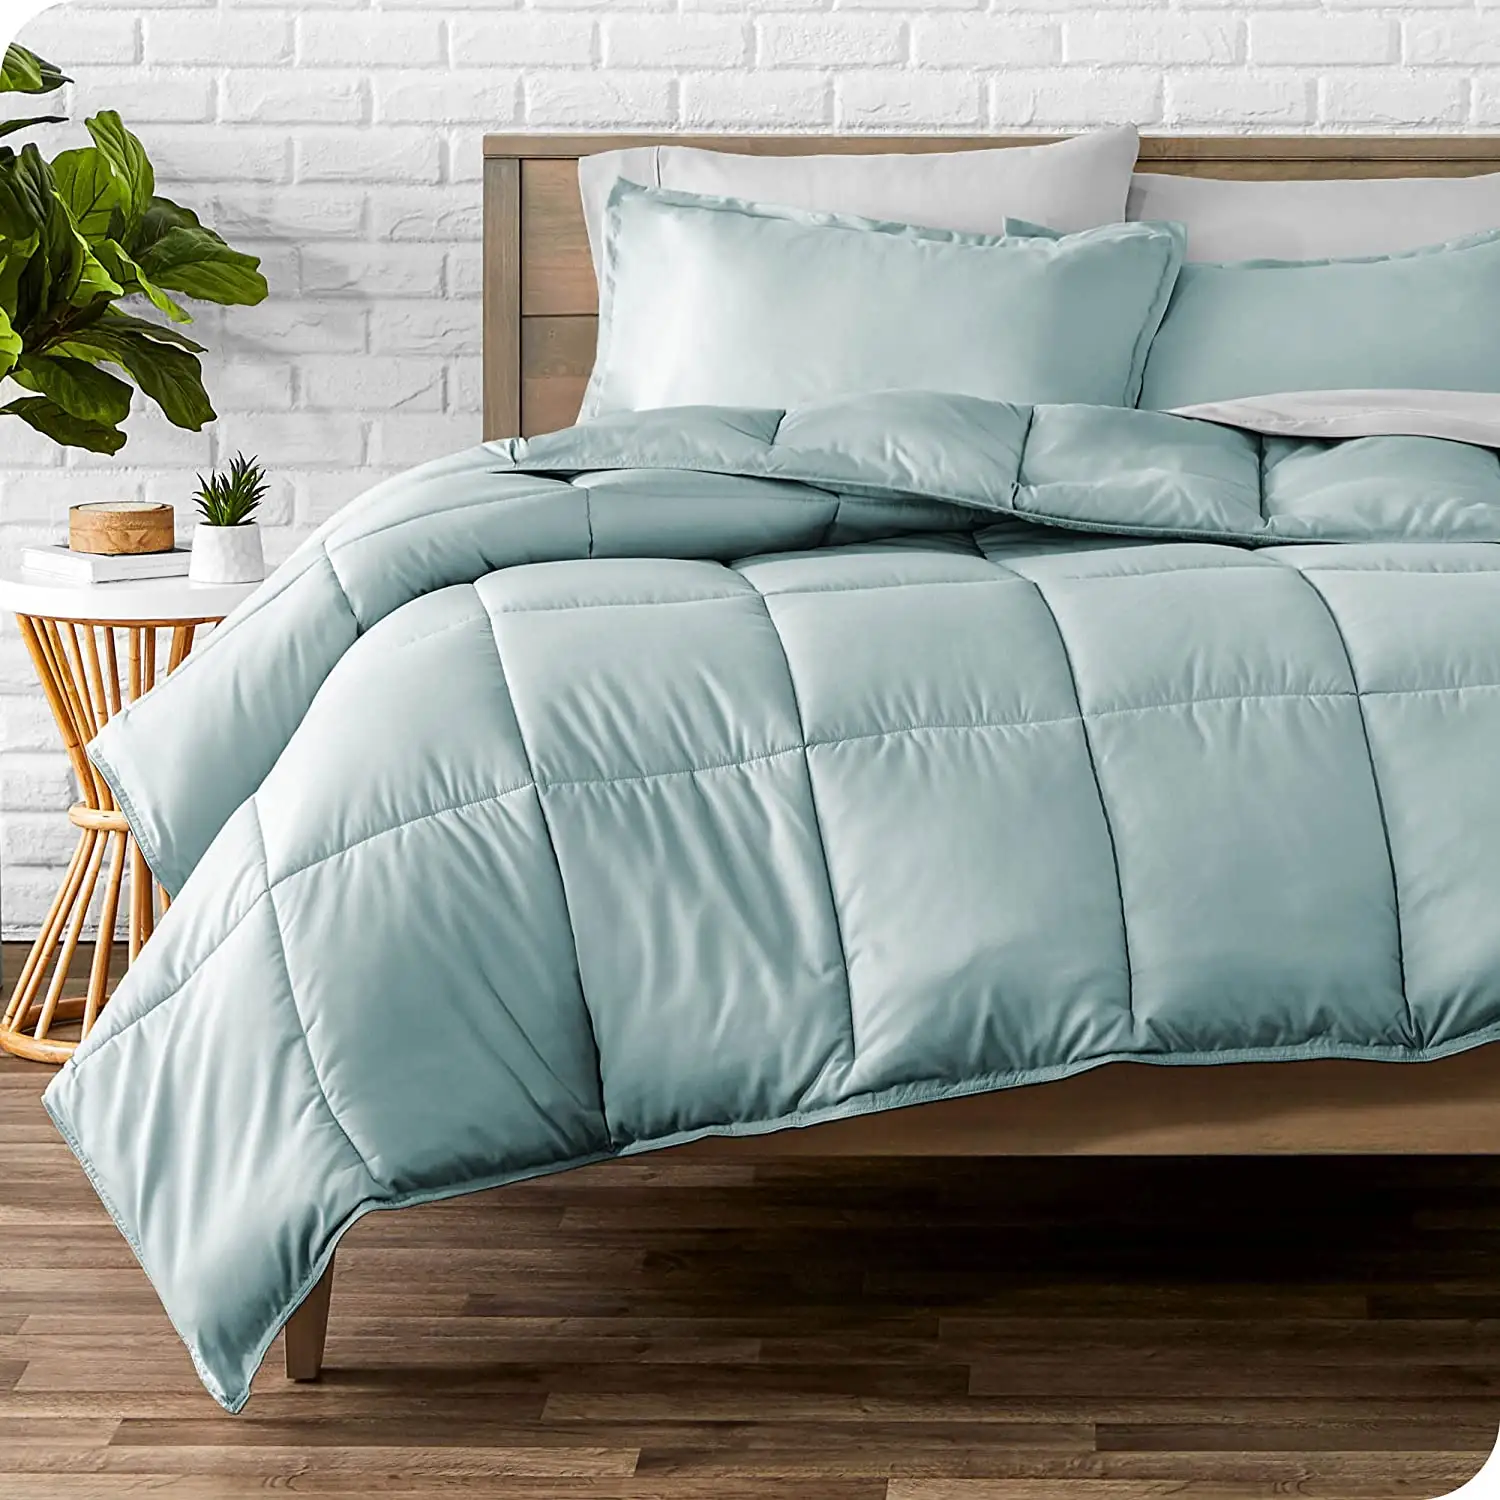 Hangzhou yaotai 100% Microfiber Winter Quilts/Comforter/Duvet